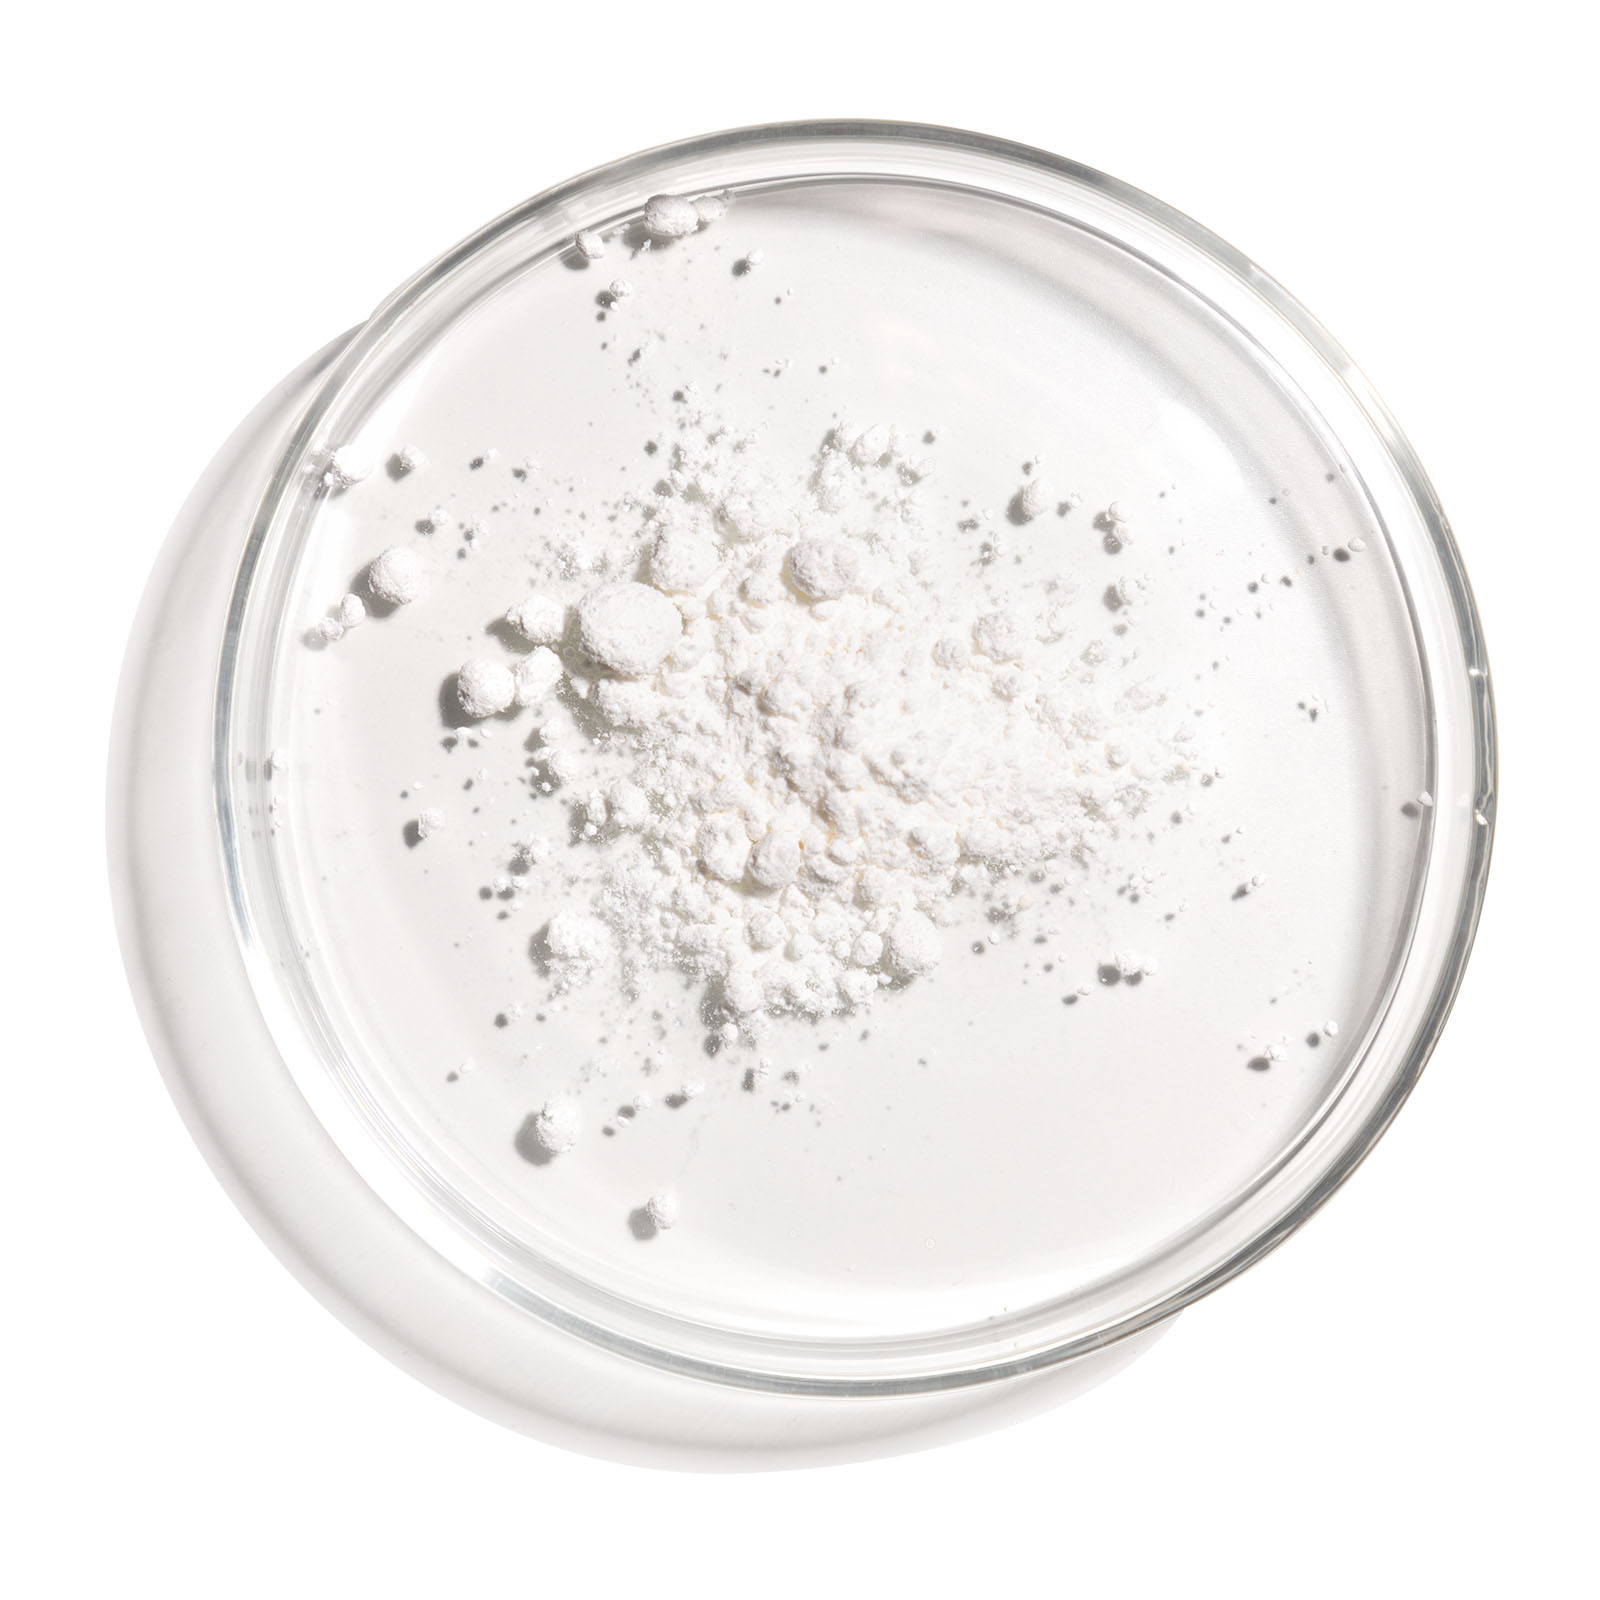 THE ORDINARY L-Ascorbic Acid Powder Vitamin C Pulver